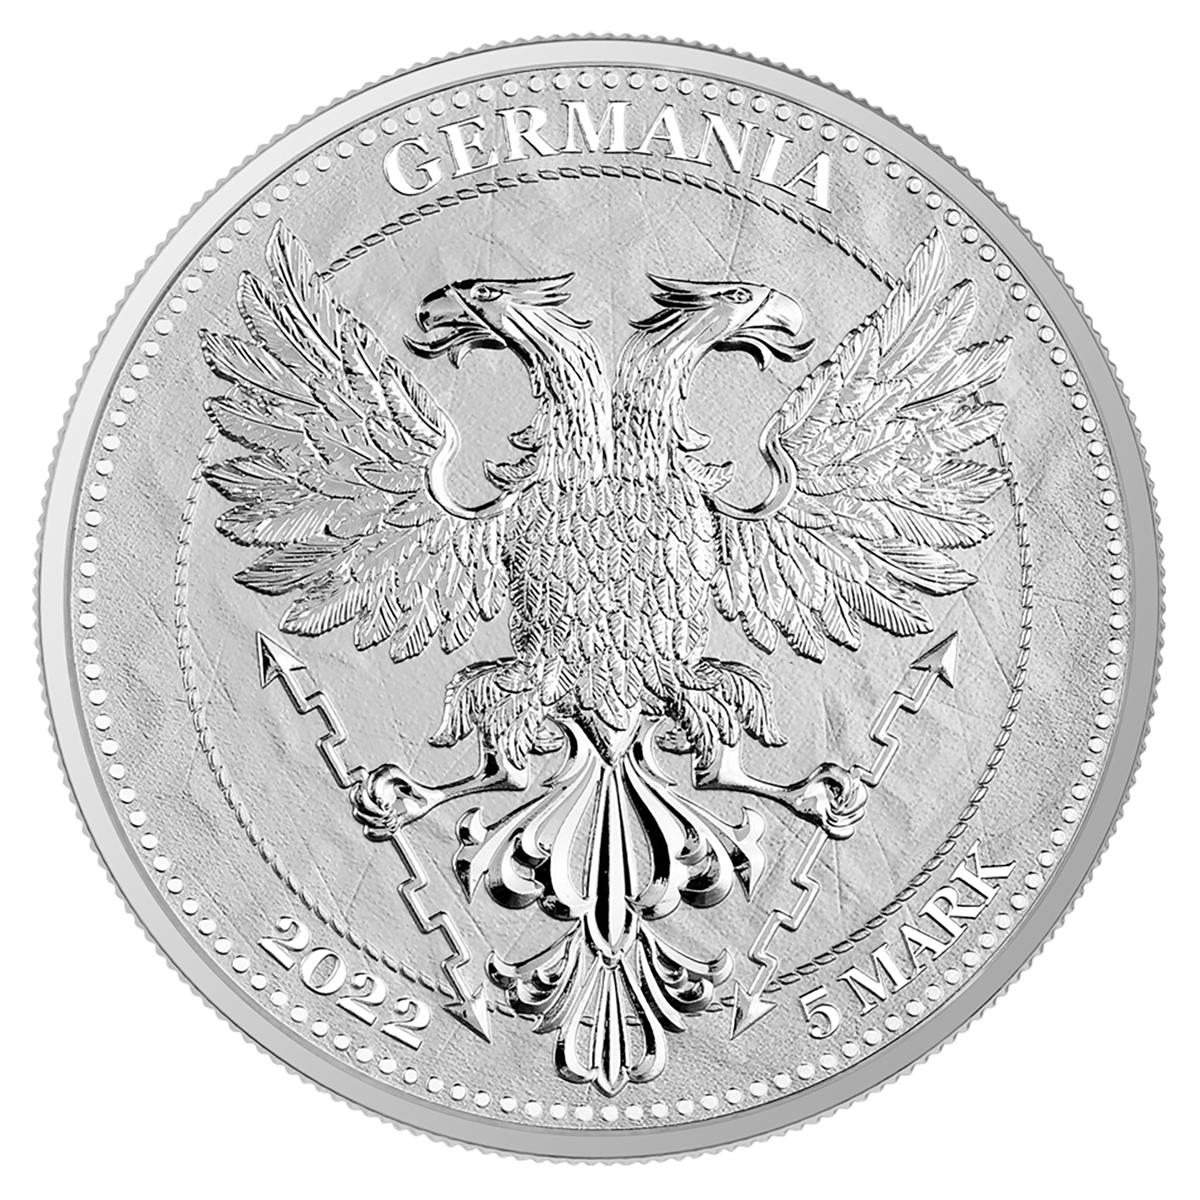 Germania Mint 2022 Mythical Forest Linden Leaf 1 oz Silver (BU)